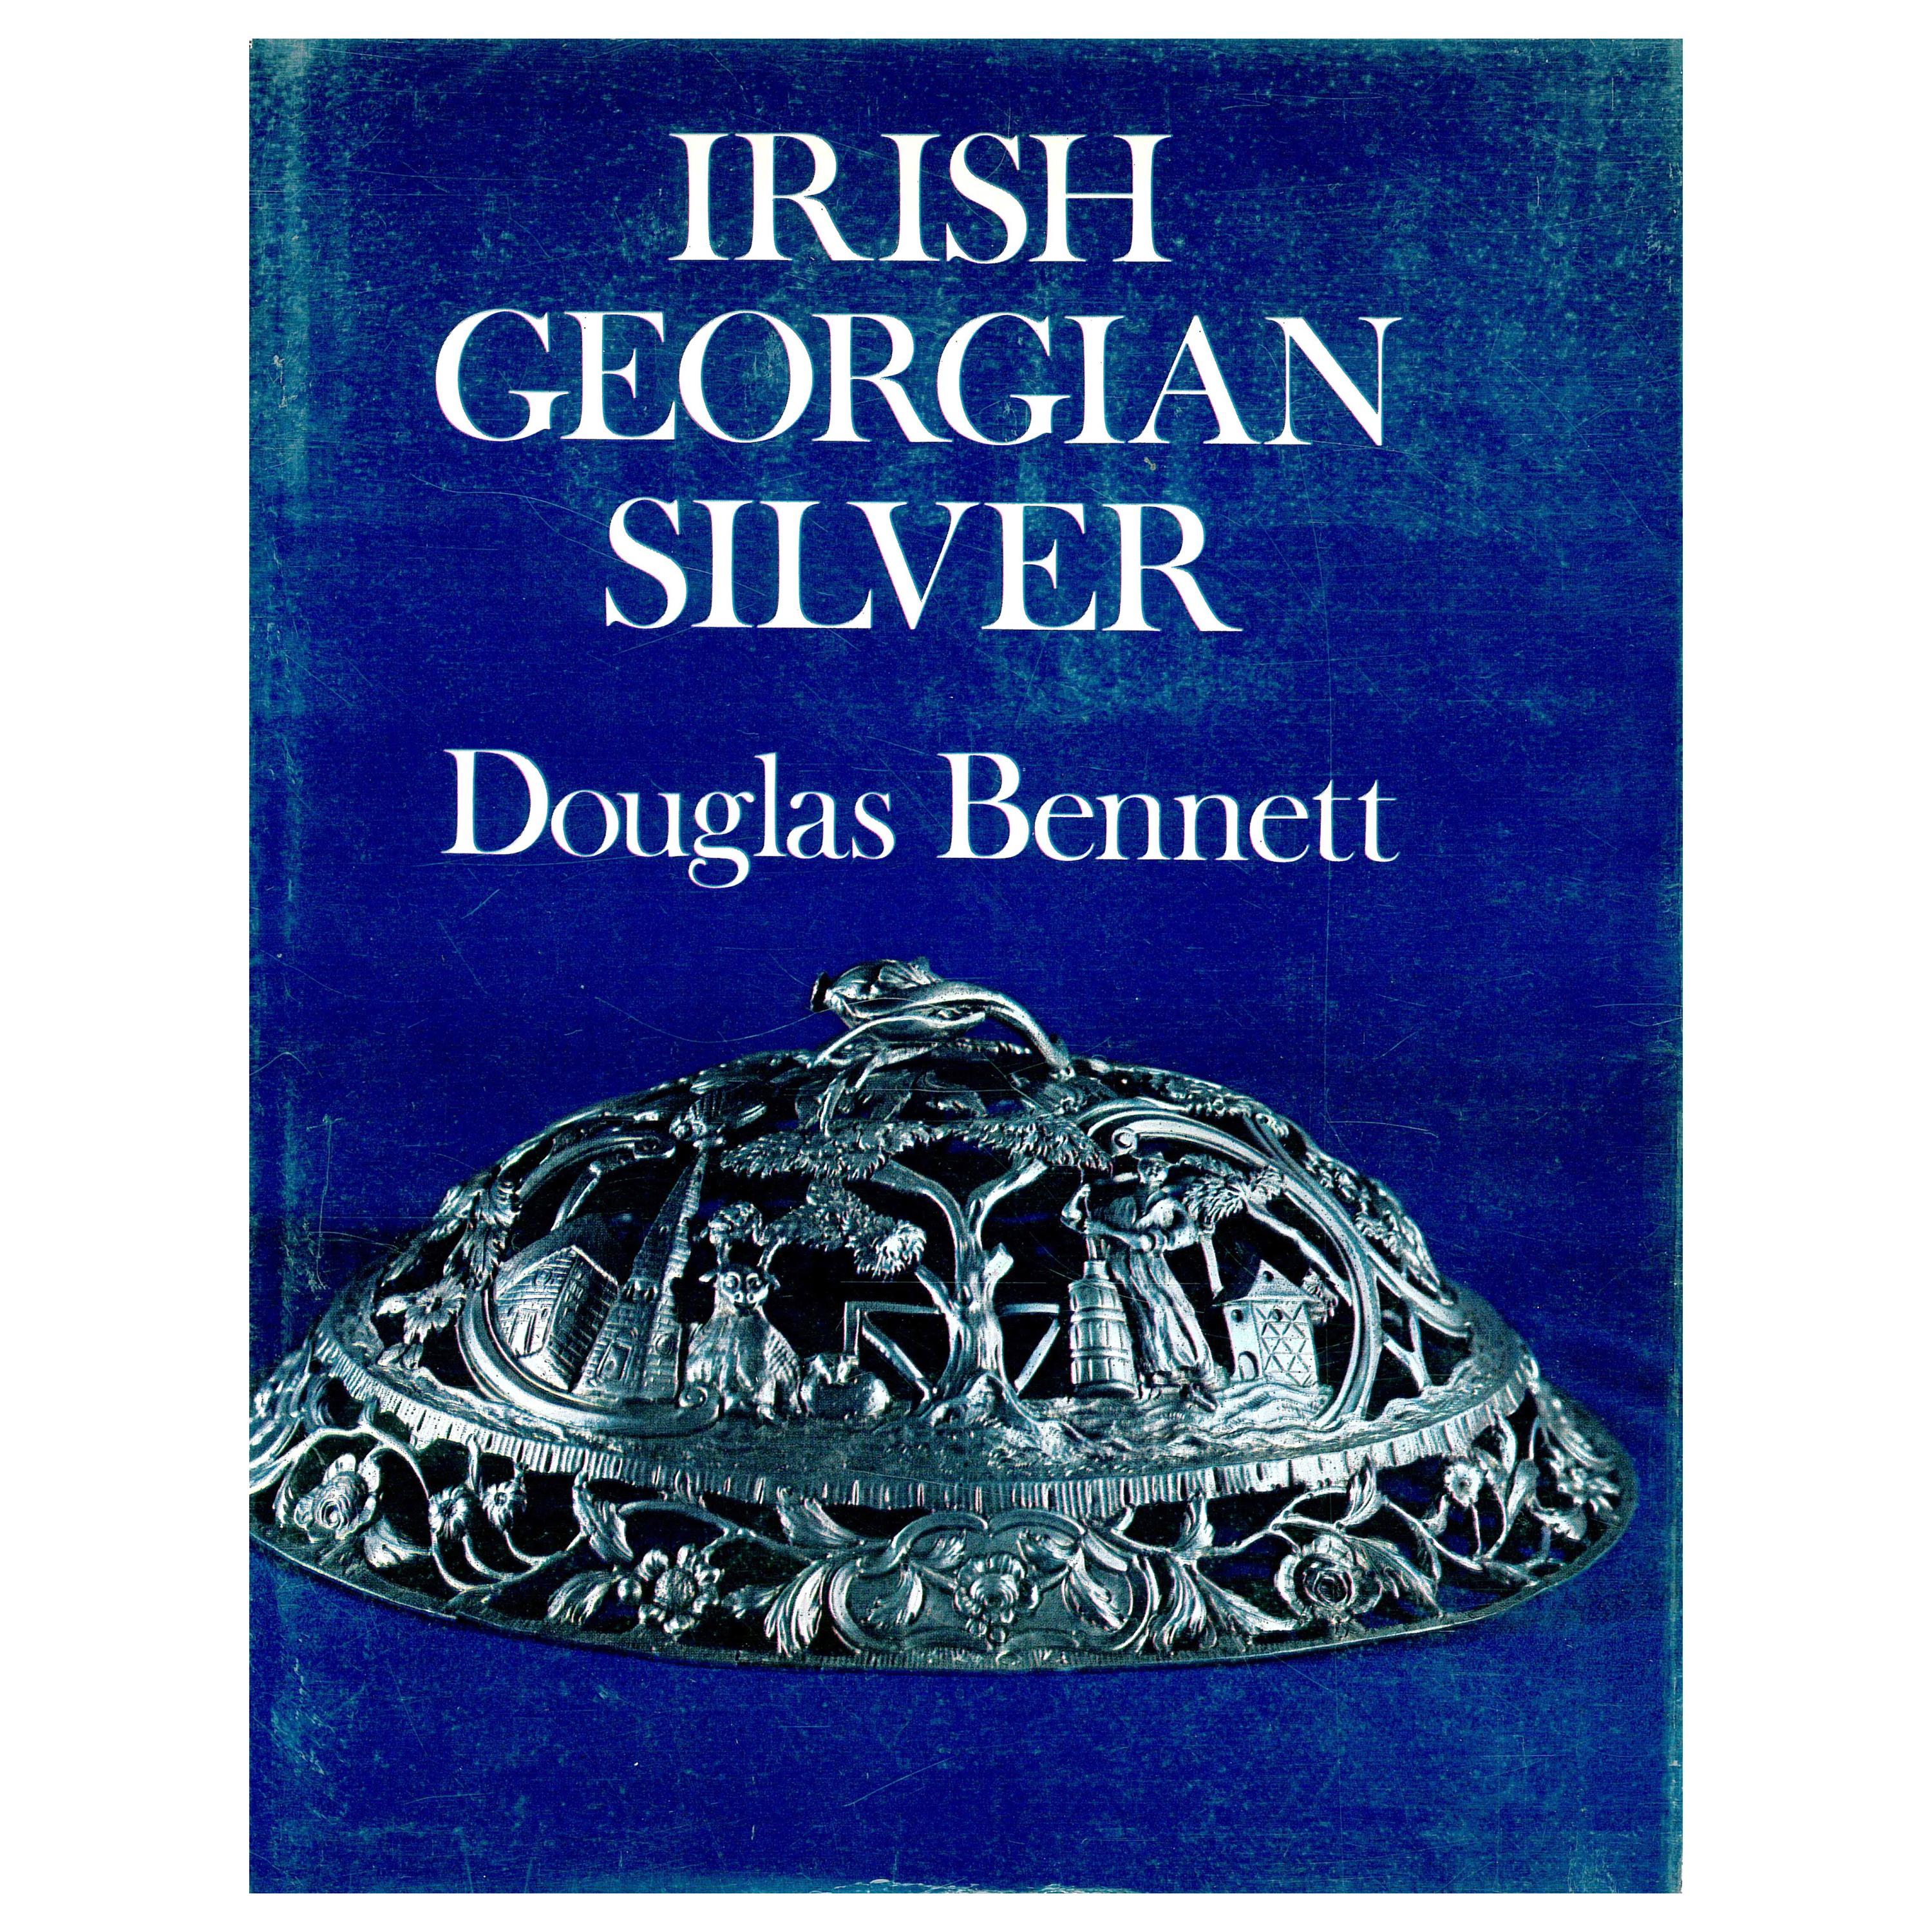 Irish Georgian Silver by Douglas Bennett (Book)